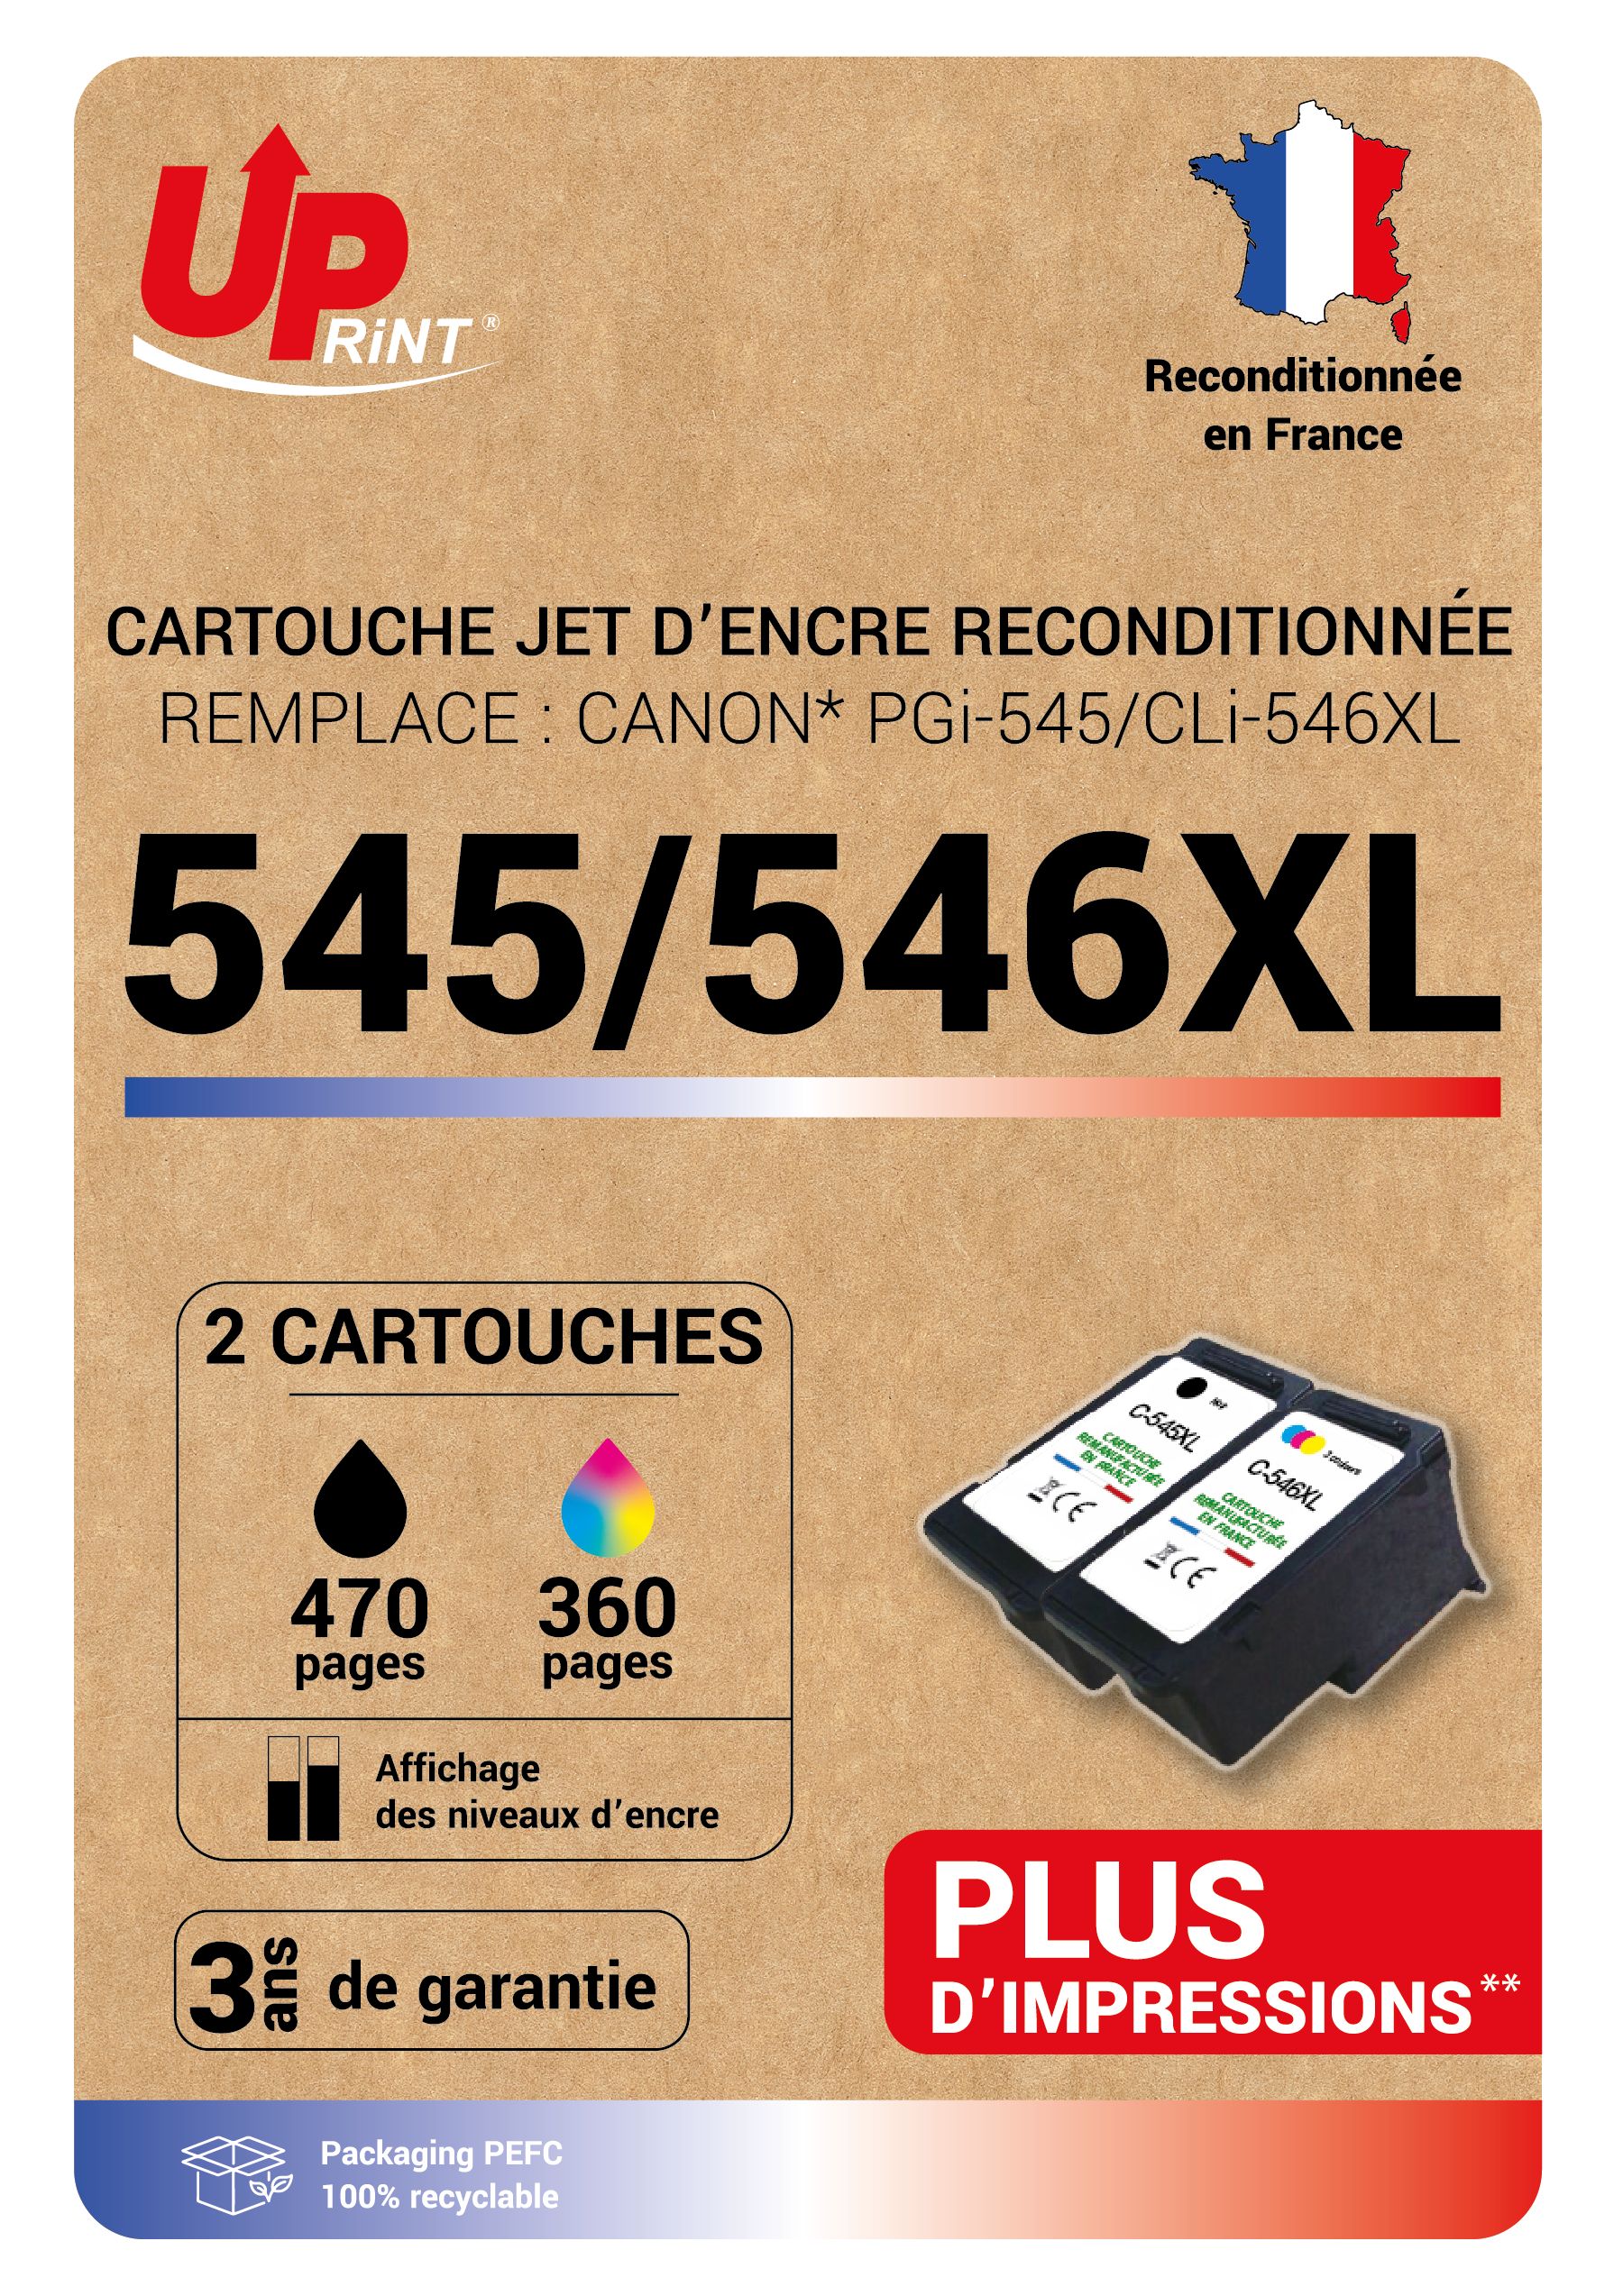 Cartouche Uprint C-550XLB compatible Canon PGI-550XL (PGI 550XL) Noir